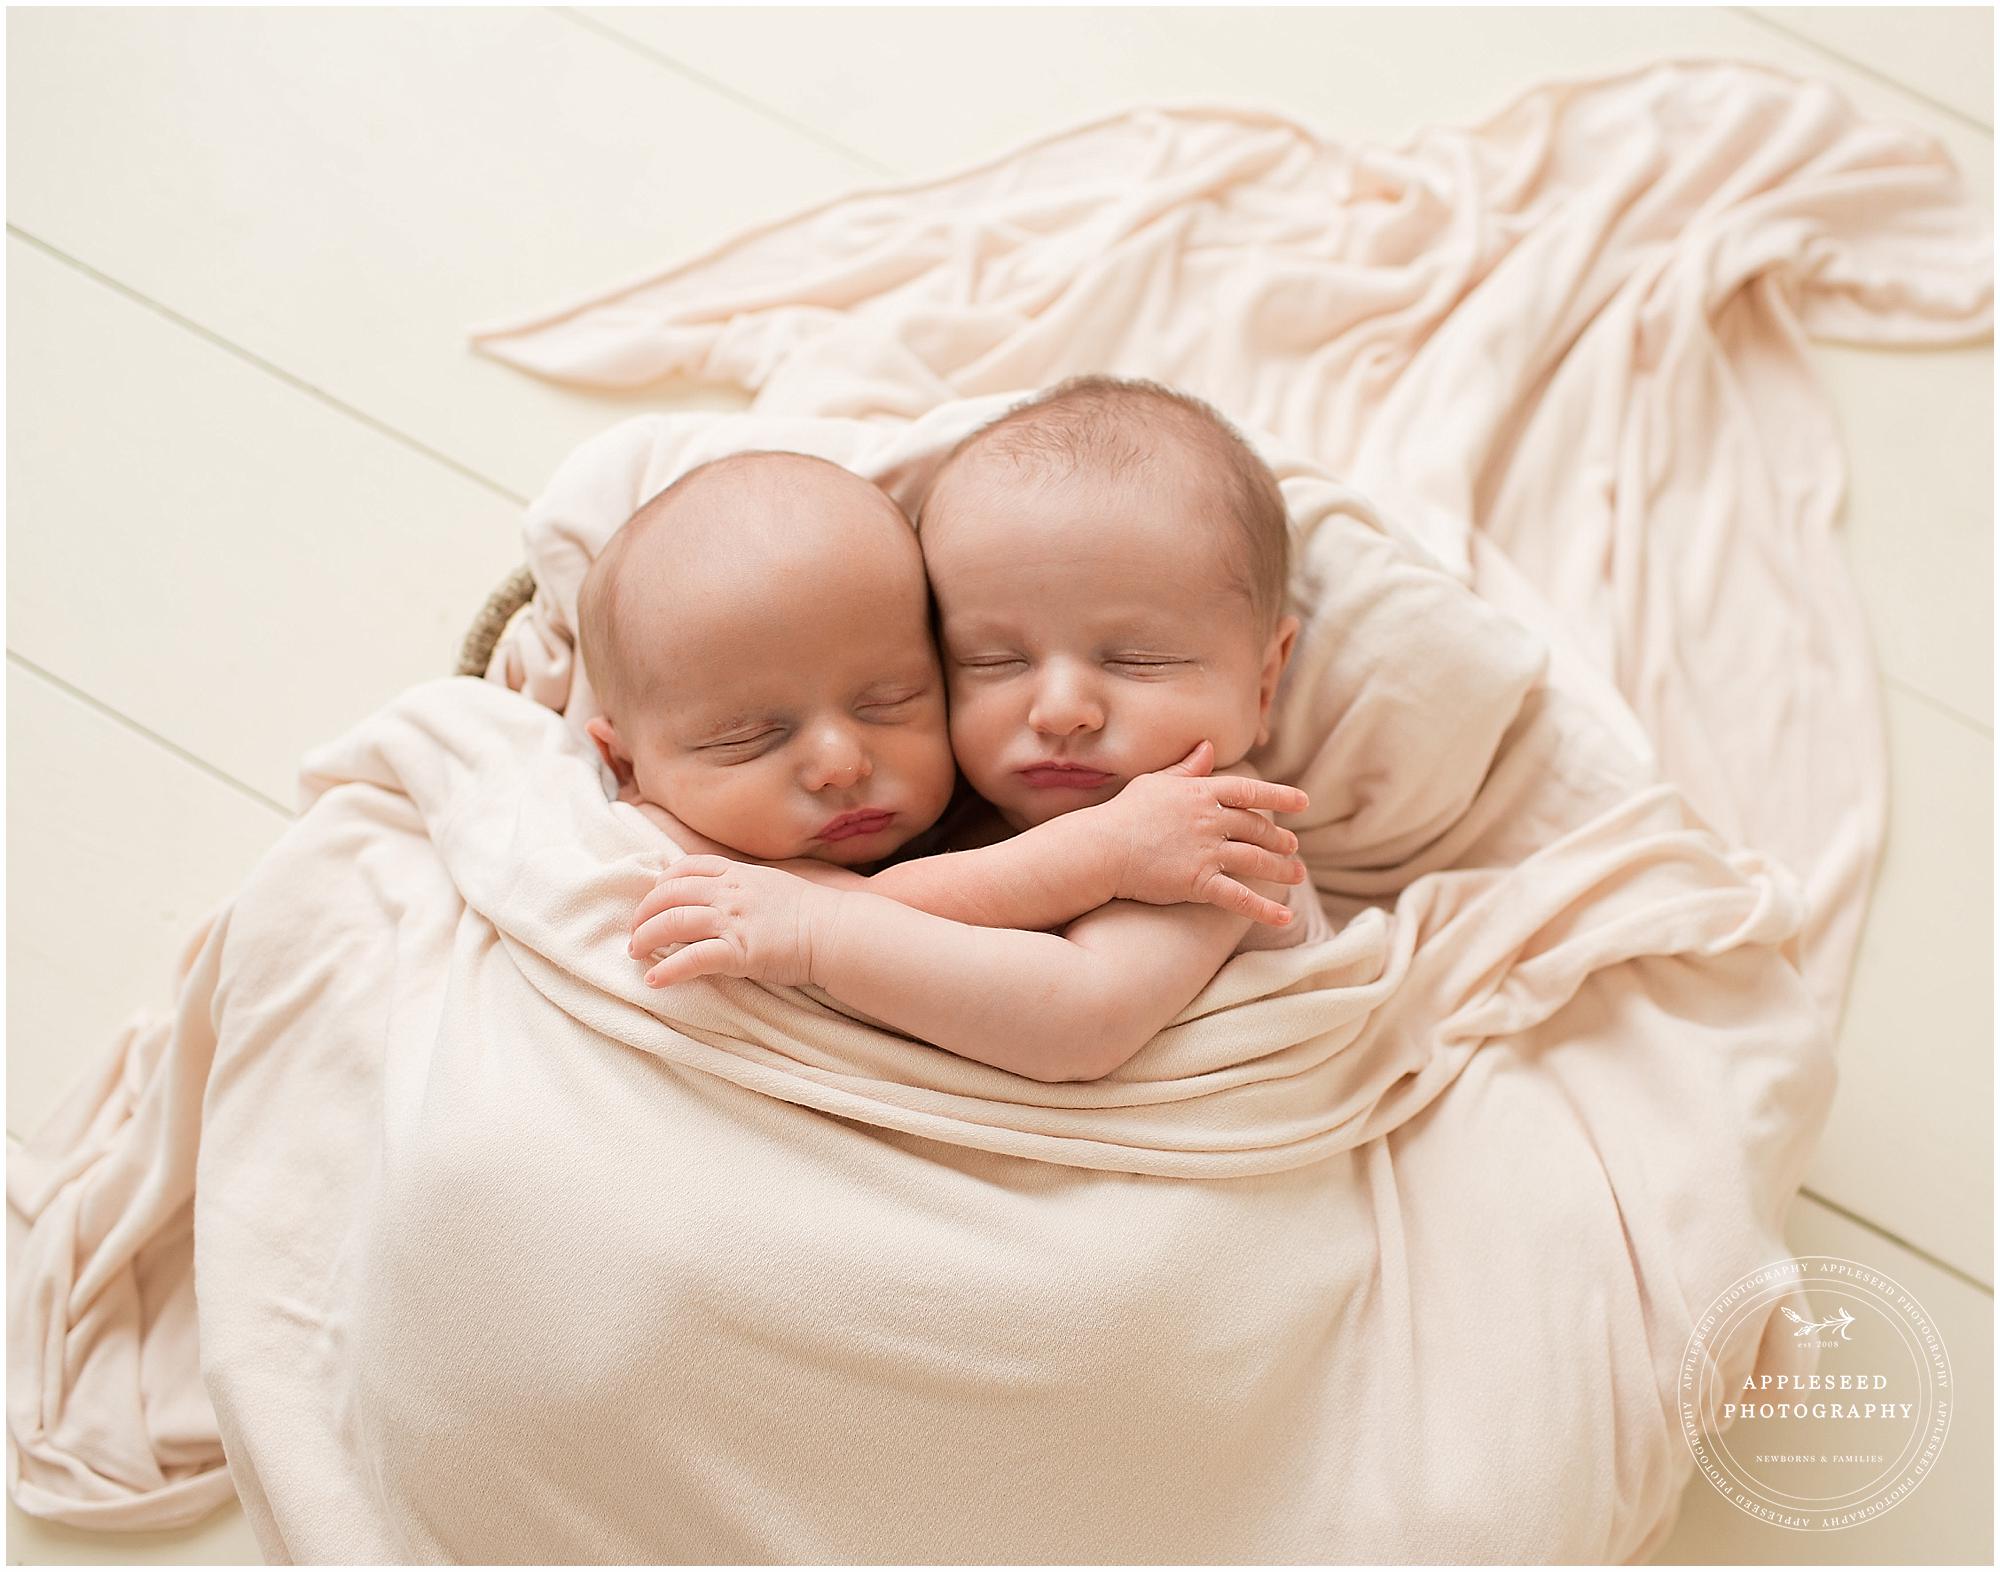 Newborn Photographer Atlanta |  Appleseed Photography